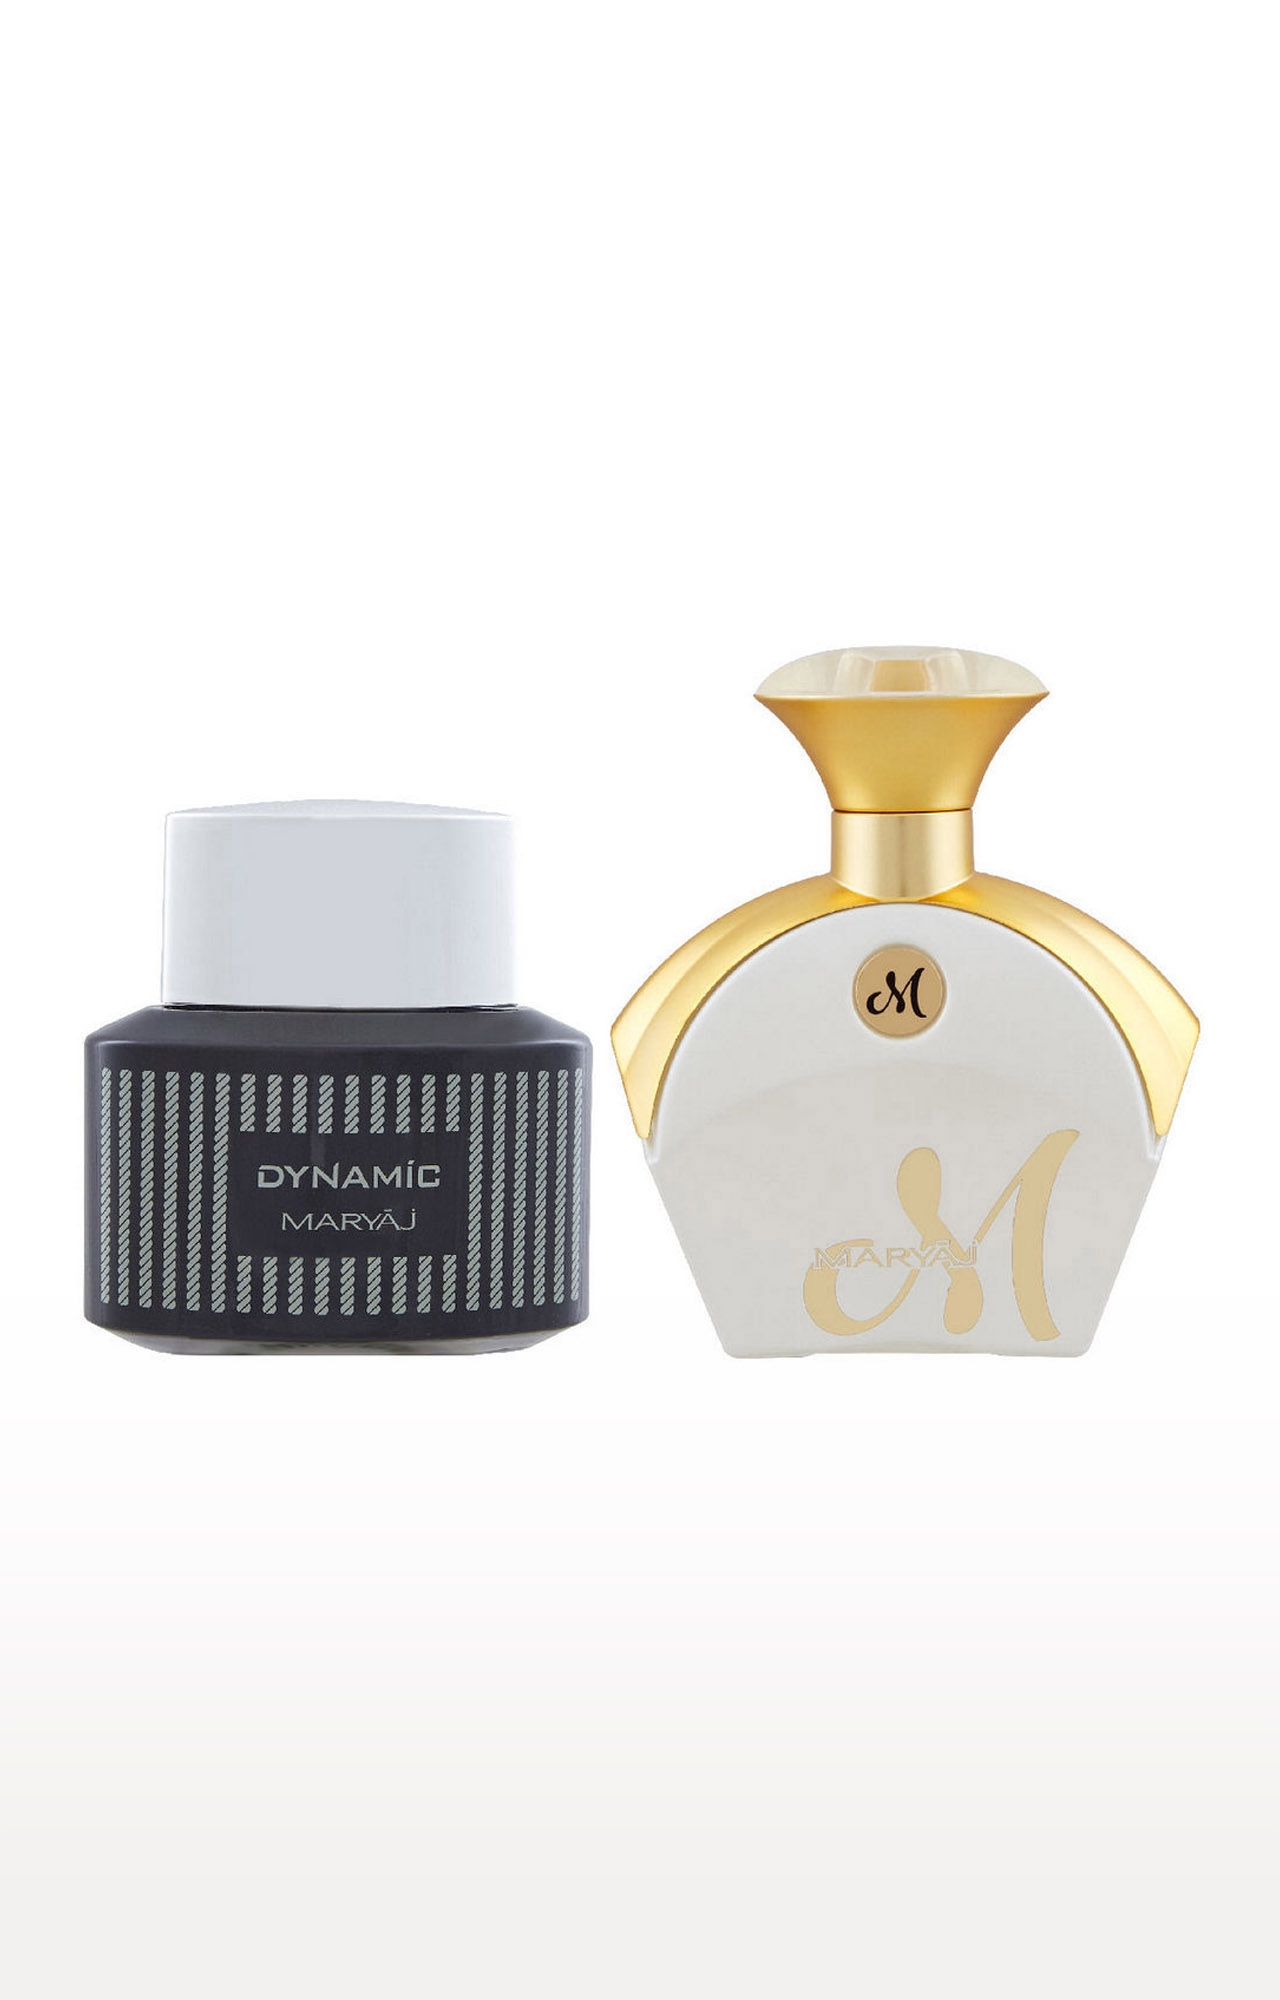 Maryaj Dynamic Eau De Parfum Perfume 100ml for Men and Maryaj M White for Her Eau De Parfum Fruity Perfume 90ml for Women